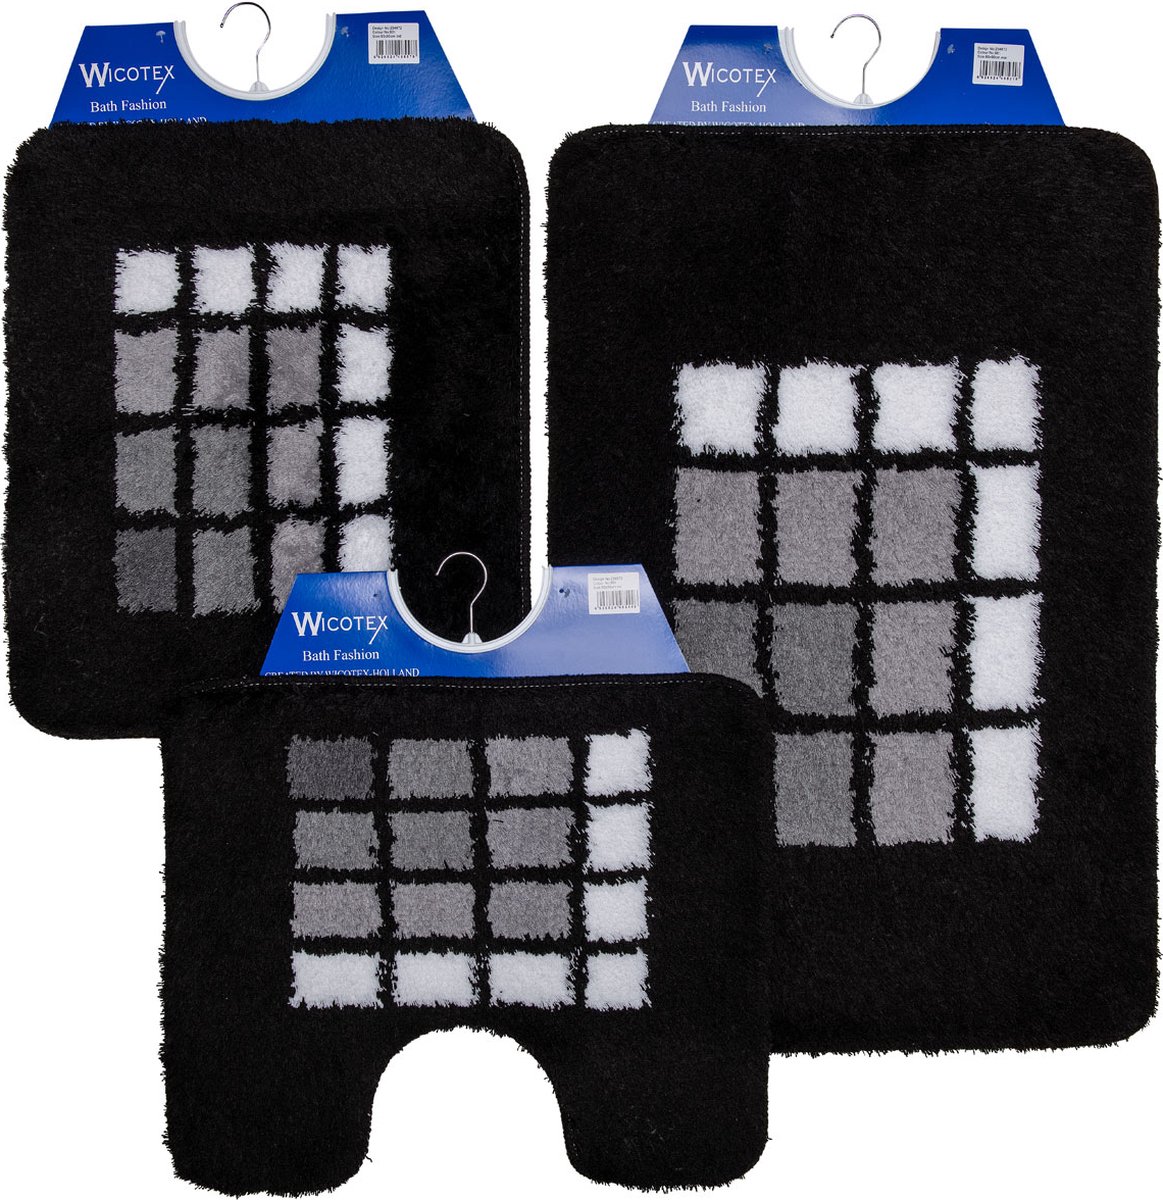 Wicotex - Badmat set - Badmat - Toiletmat - Bidetmat Zwarte rand geblokt - Antislip onderkant - WC mat met uitsparing